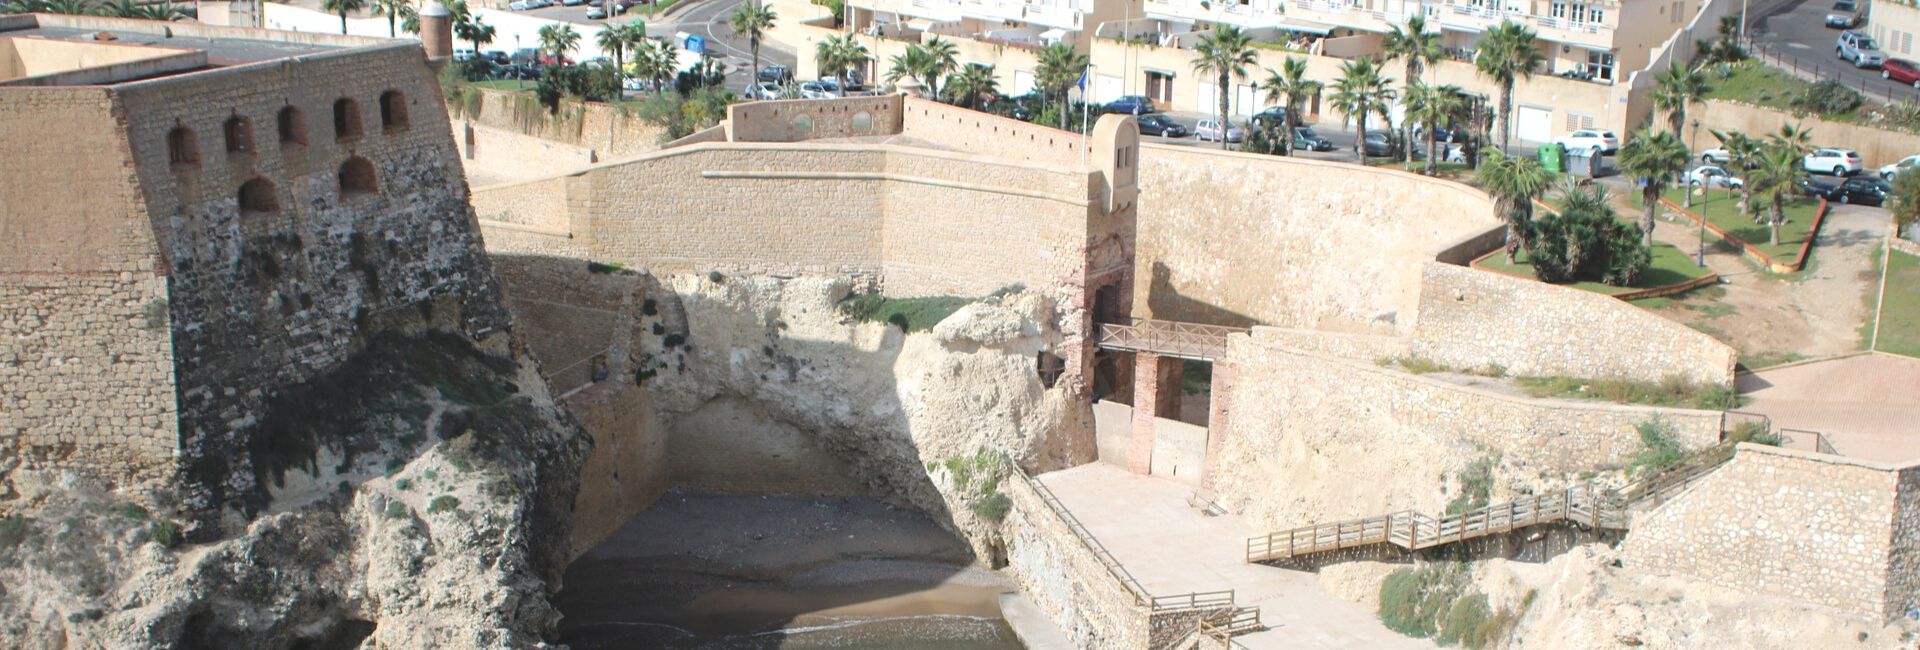 Turismo en Melilla